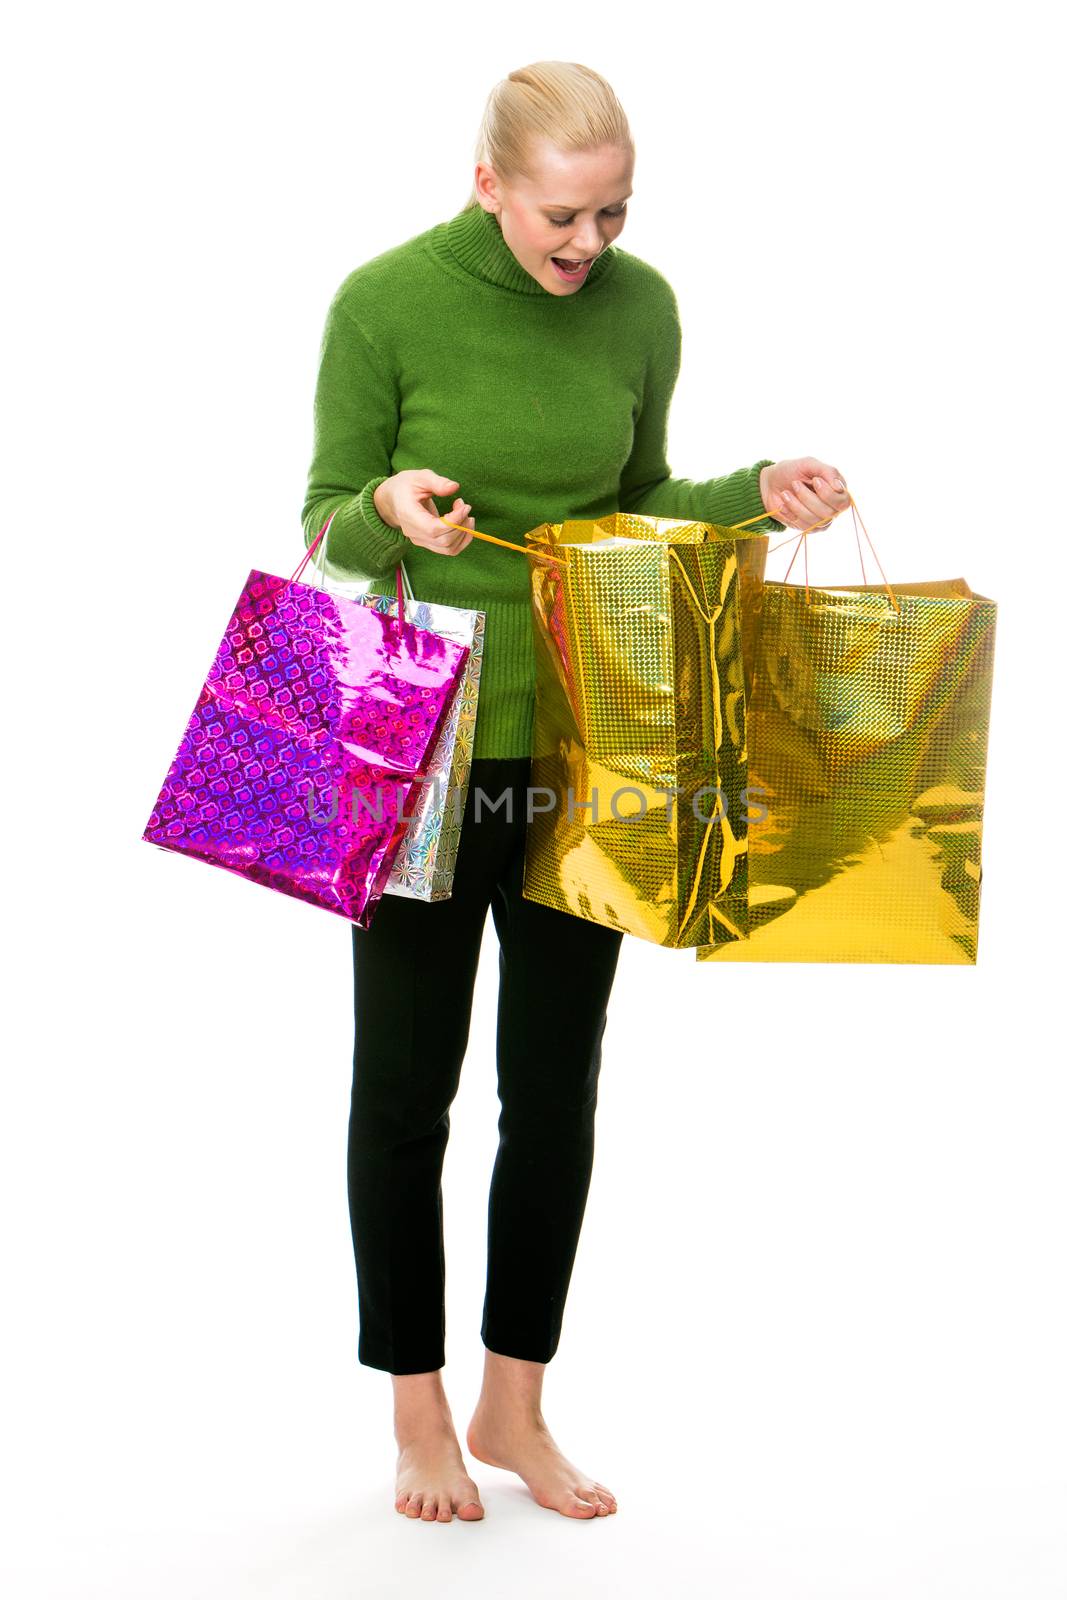 woman doing shopping for christmas